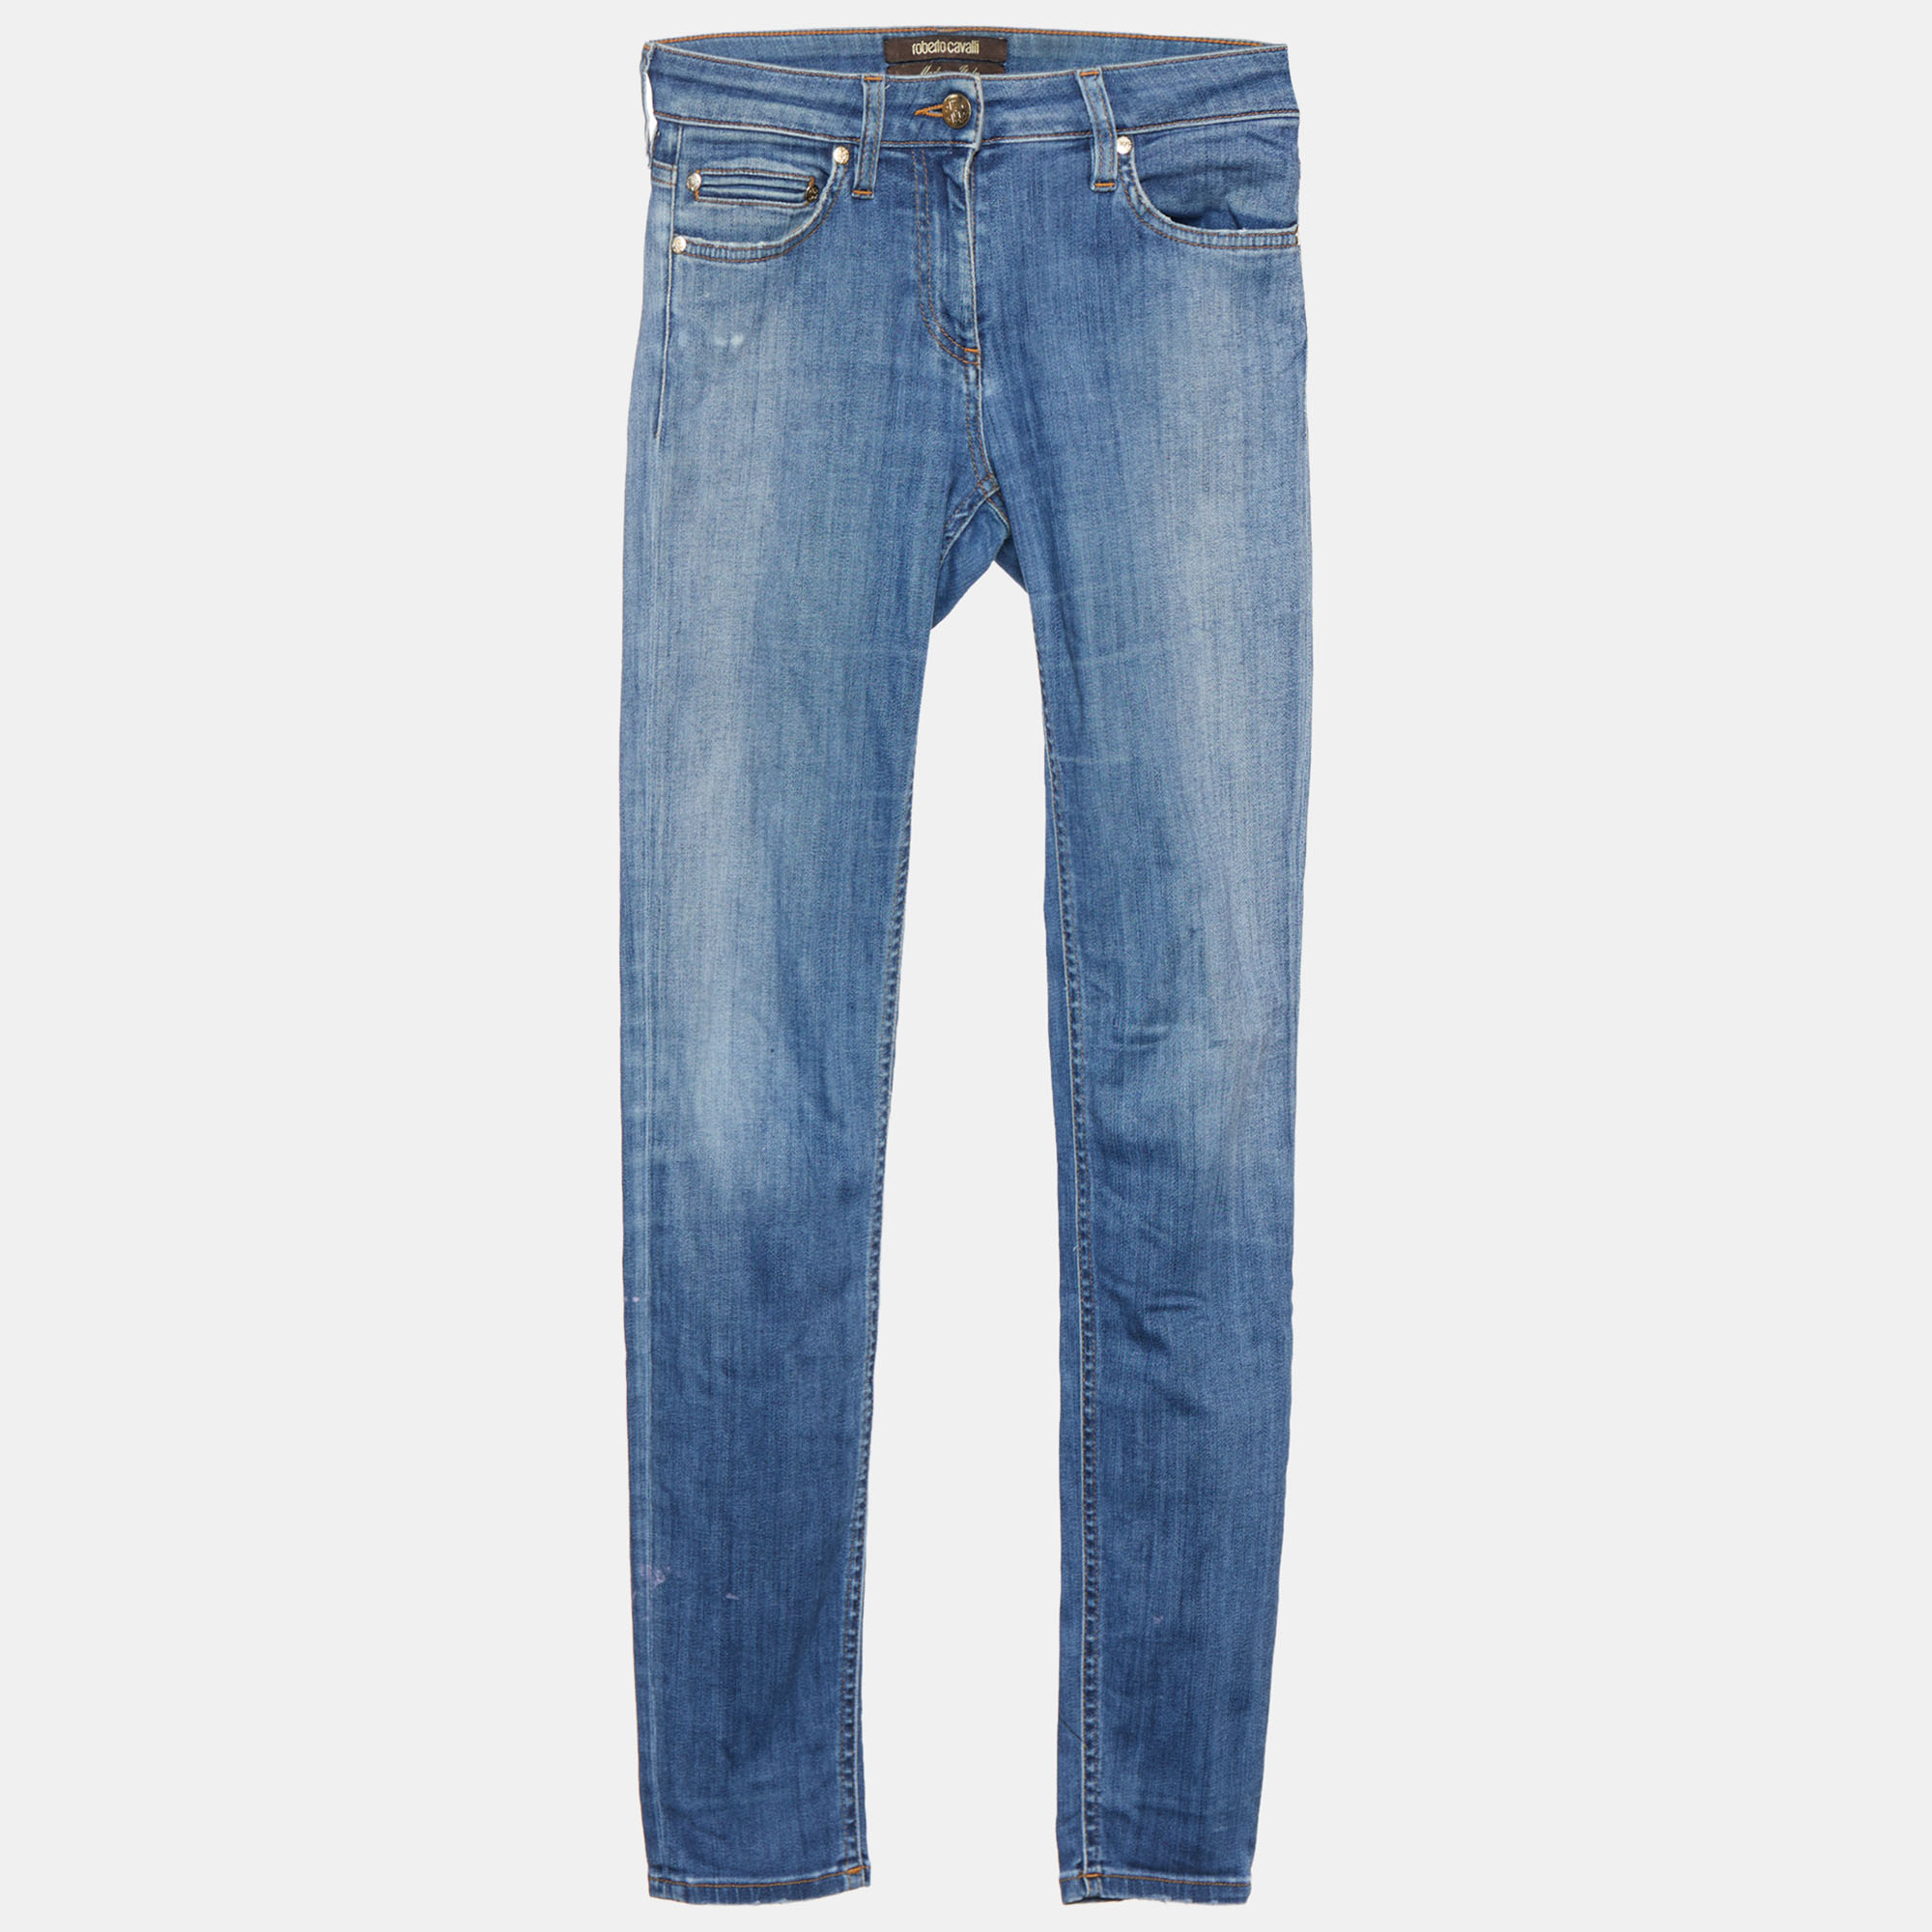 Roberto Cavalli Navy Blue Denim Skinny Jeans S Waist 28